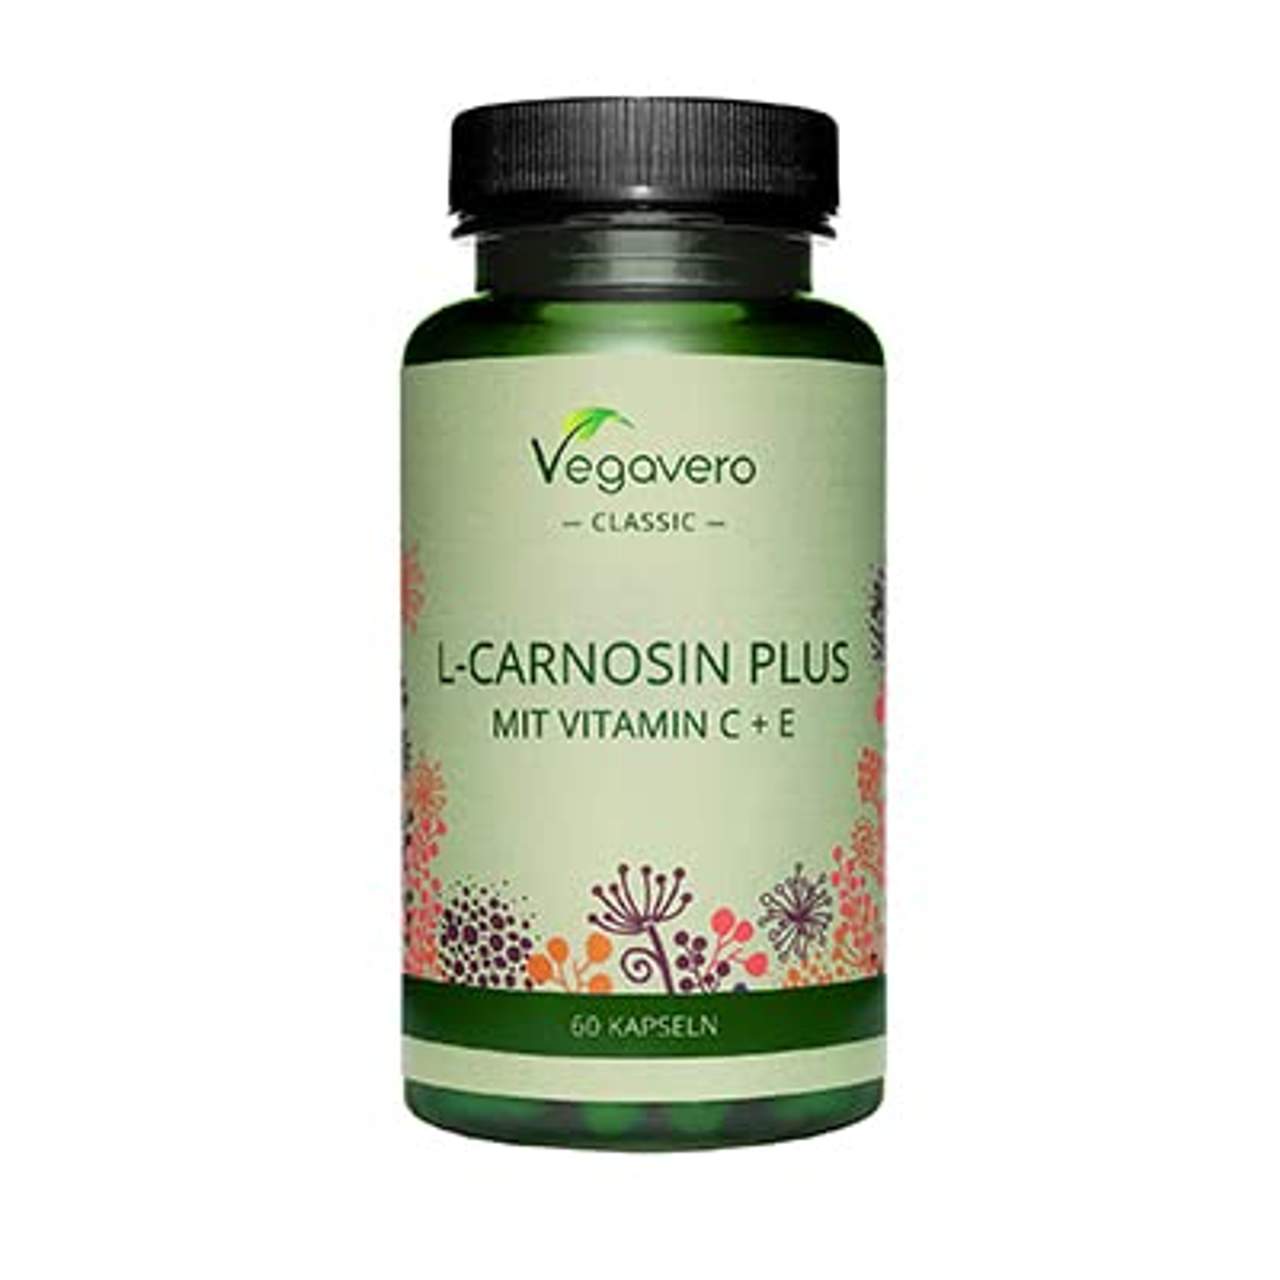 L-CARNOSIN Kapseln Vegavero Mit Vitamin C & E